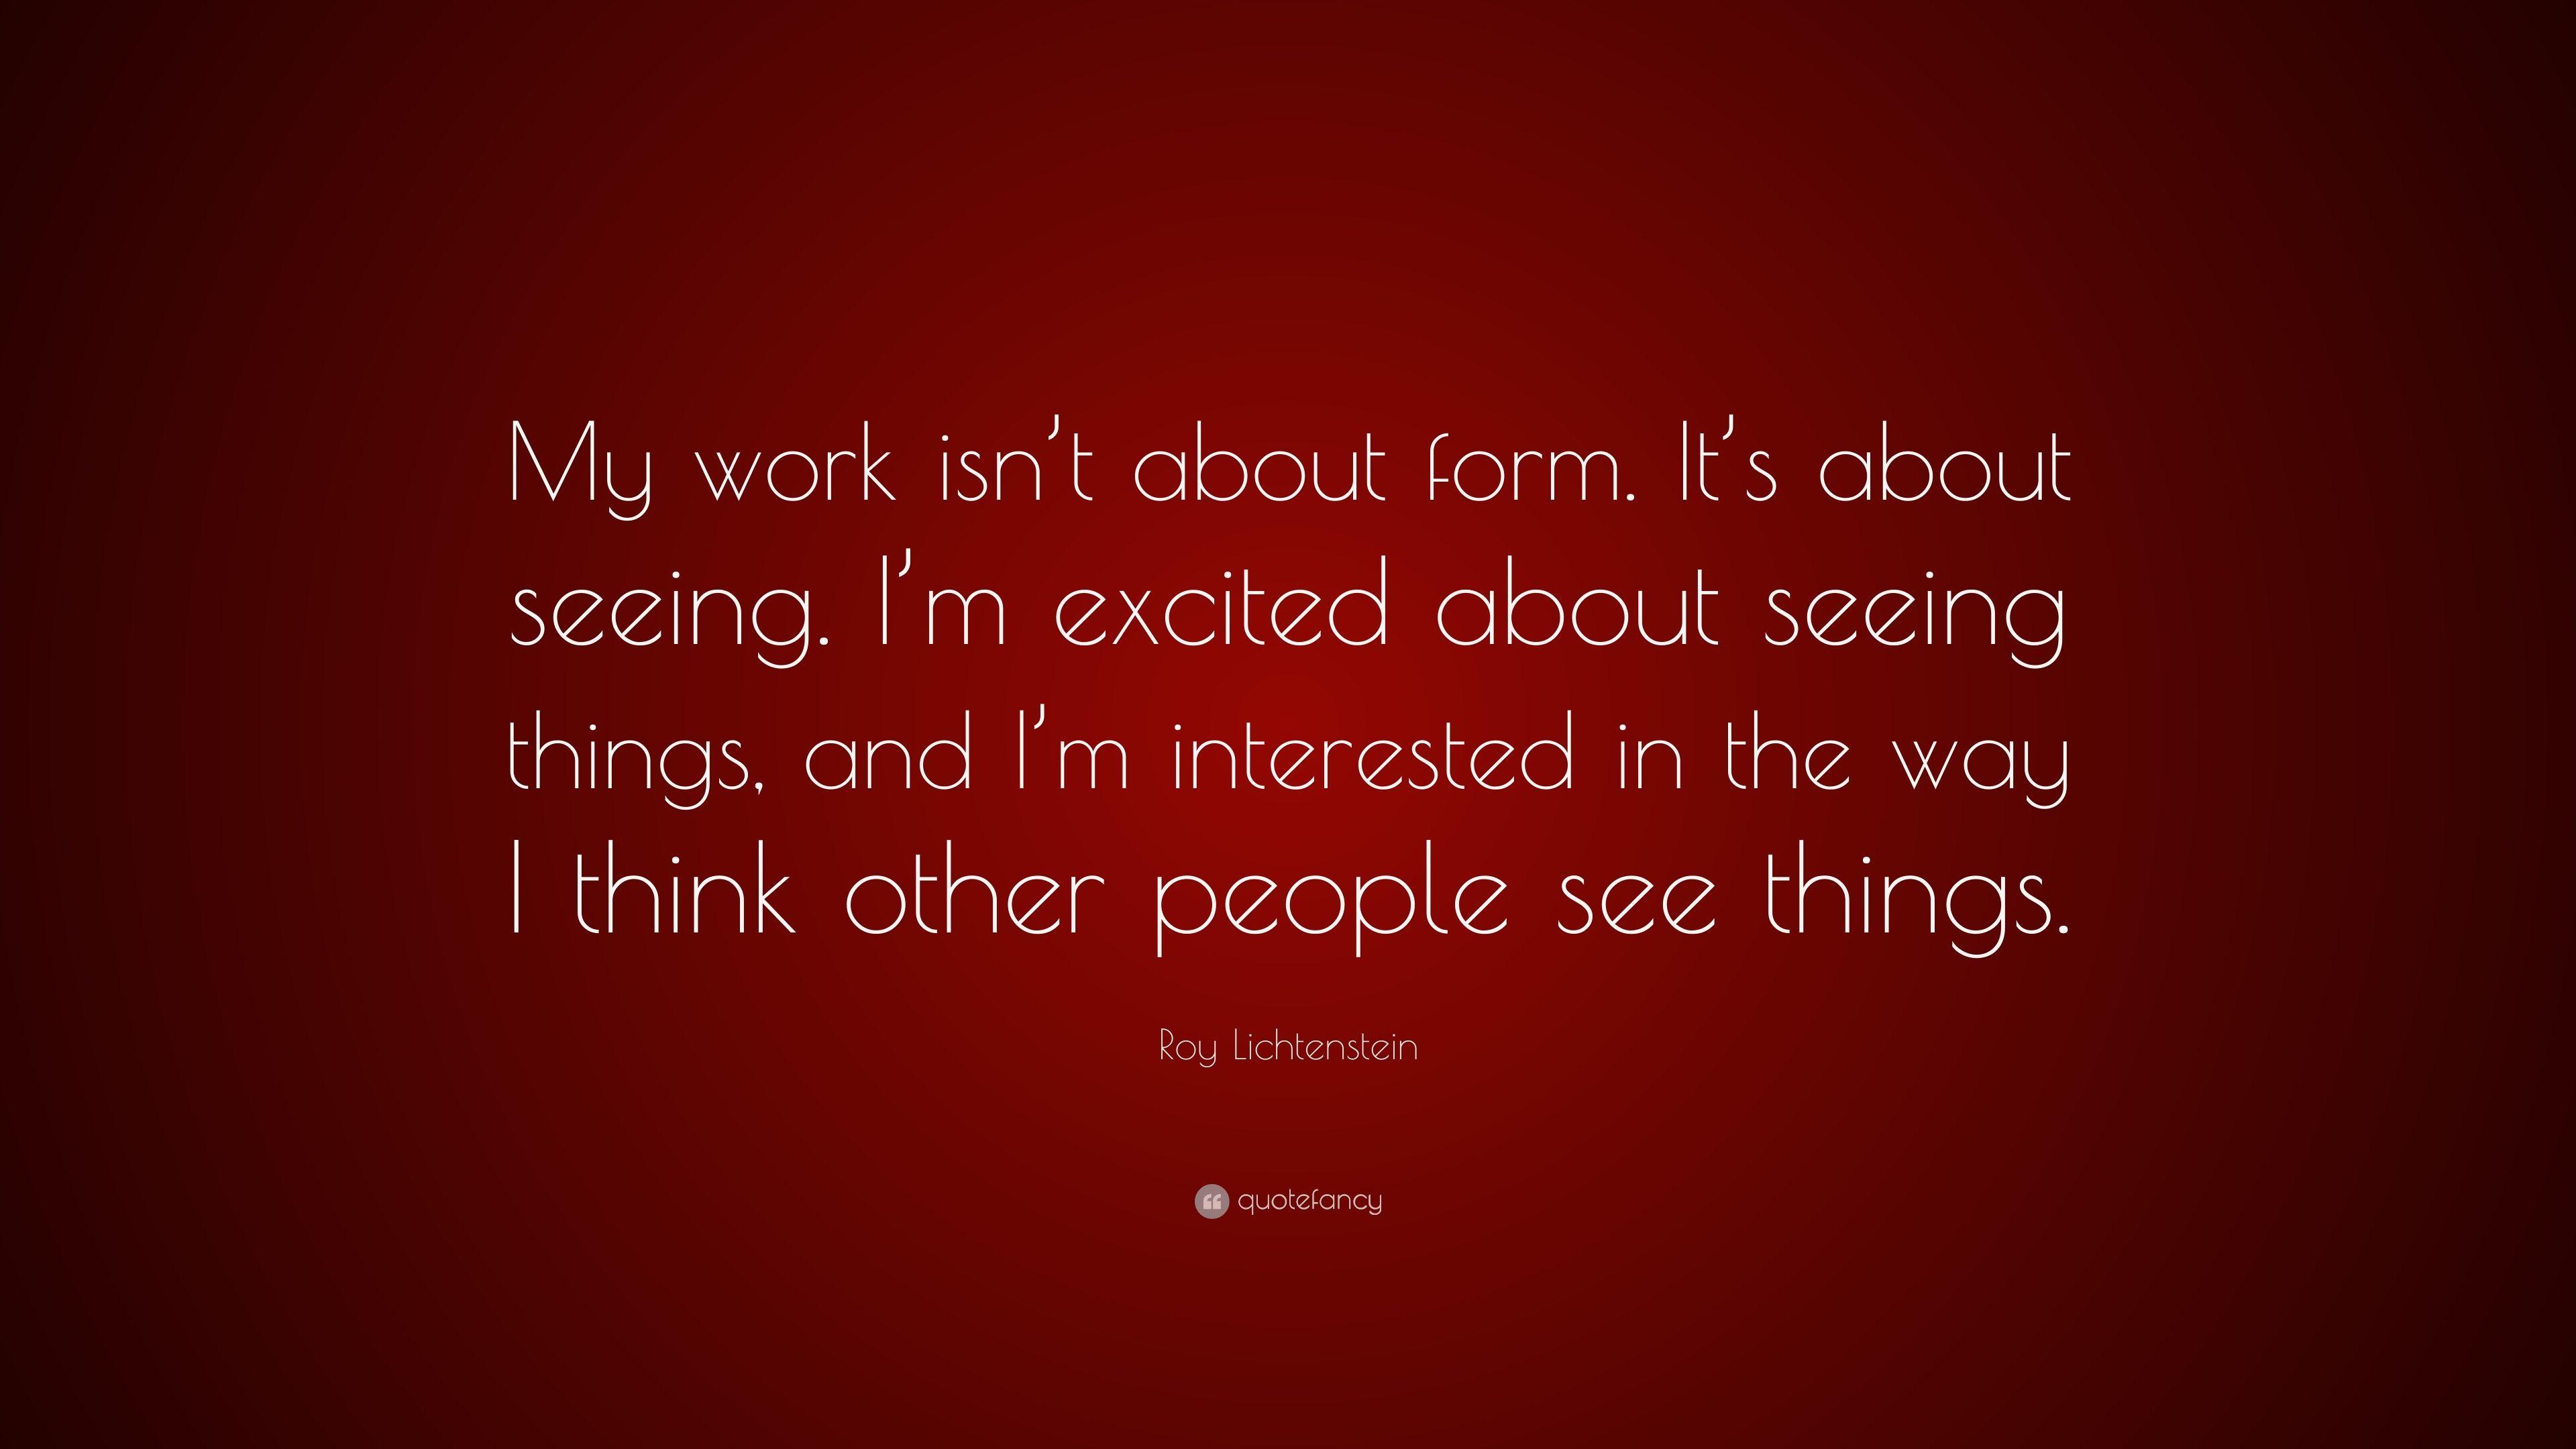 Roy Lichtenstein Quote: “My work isn't about form. It's about